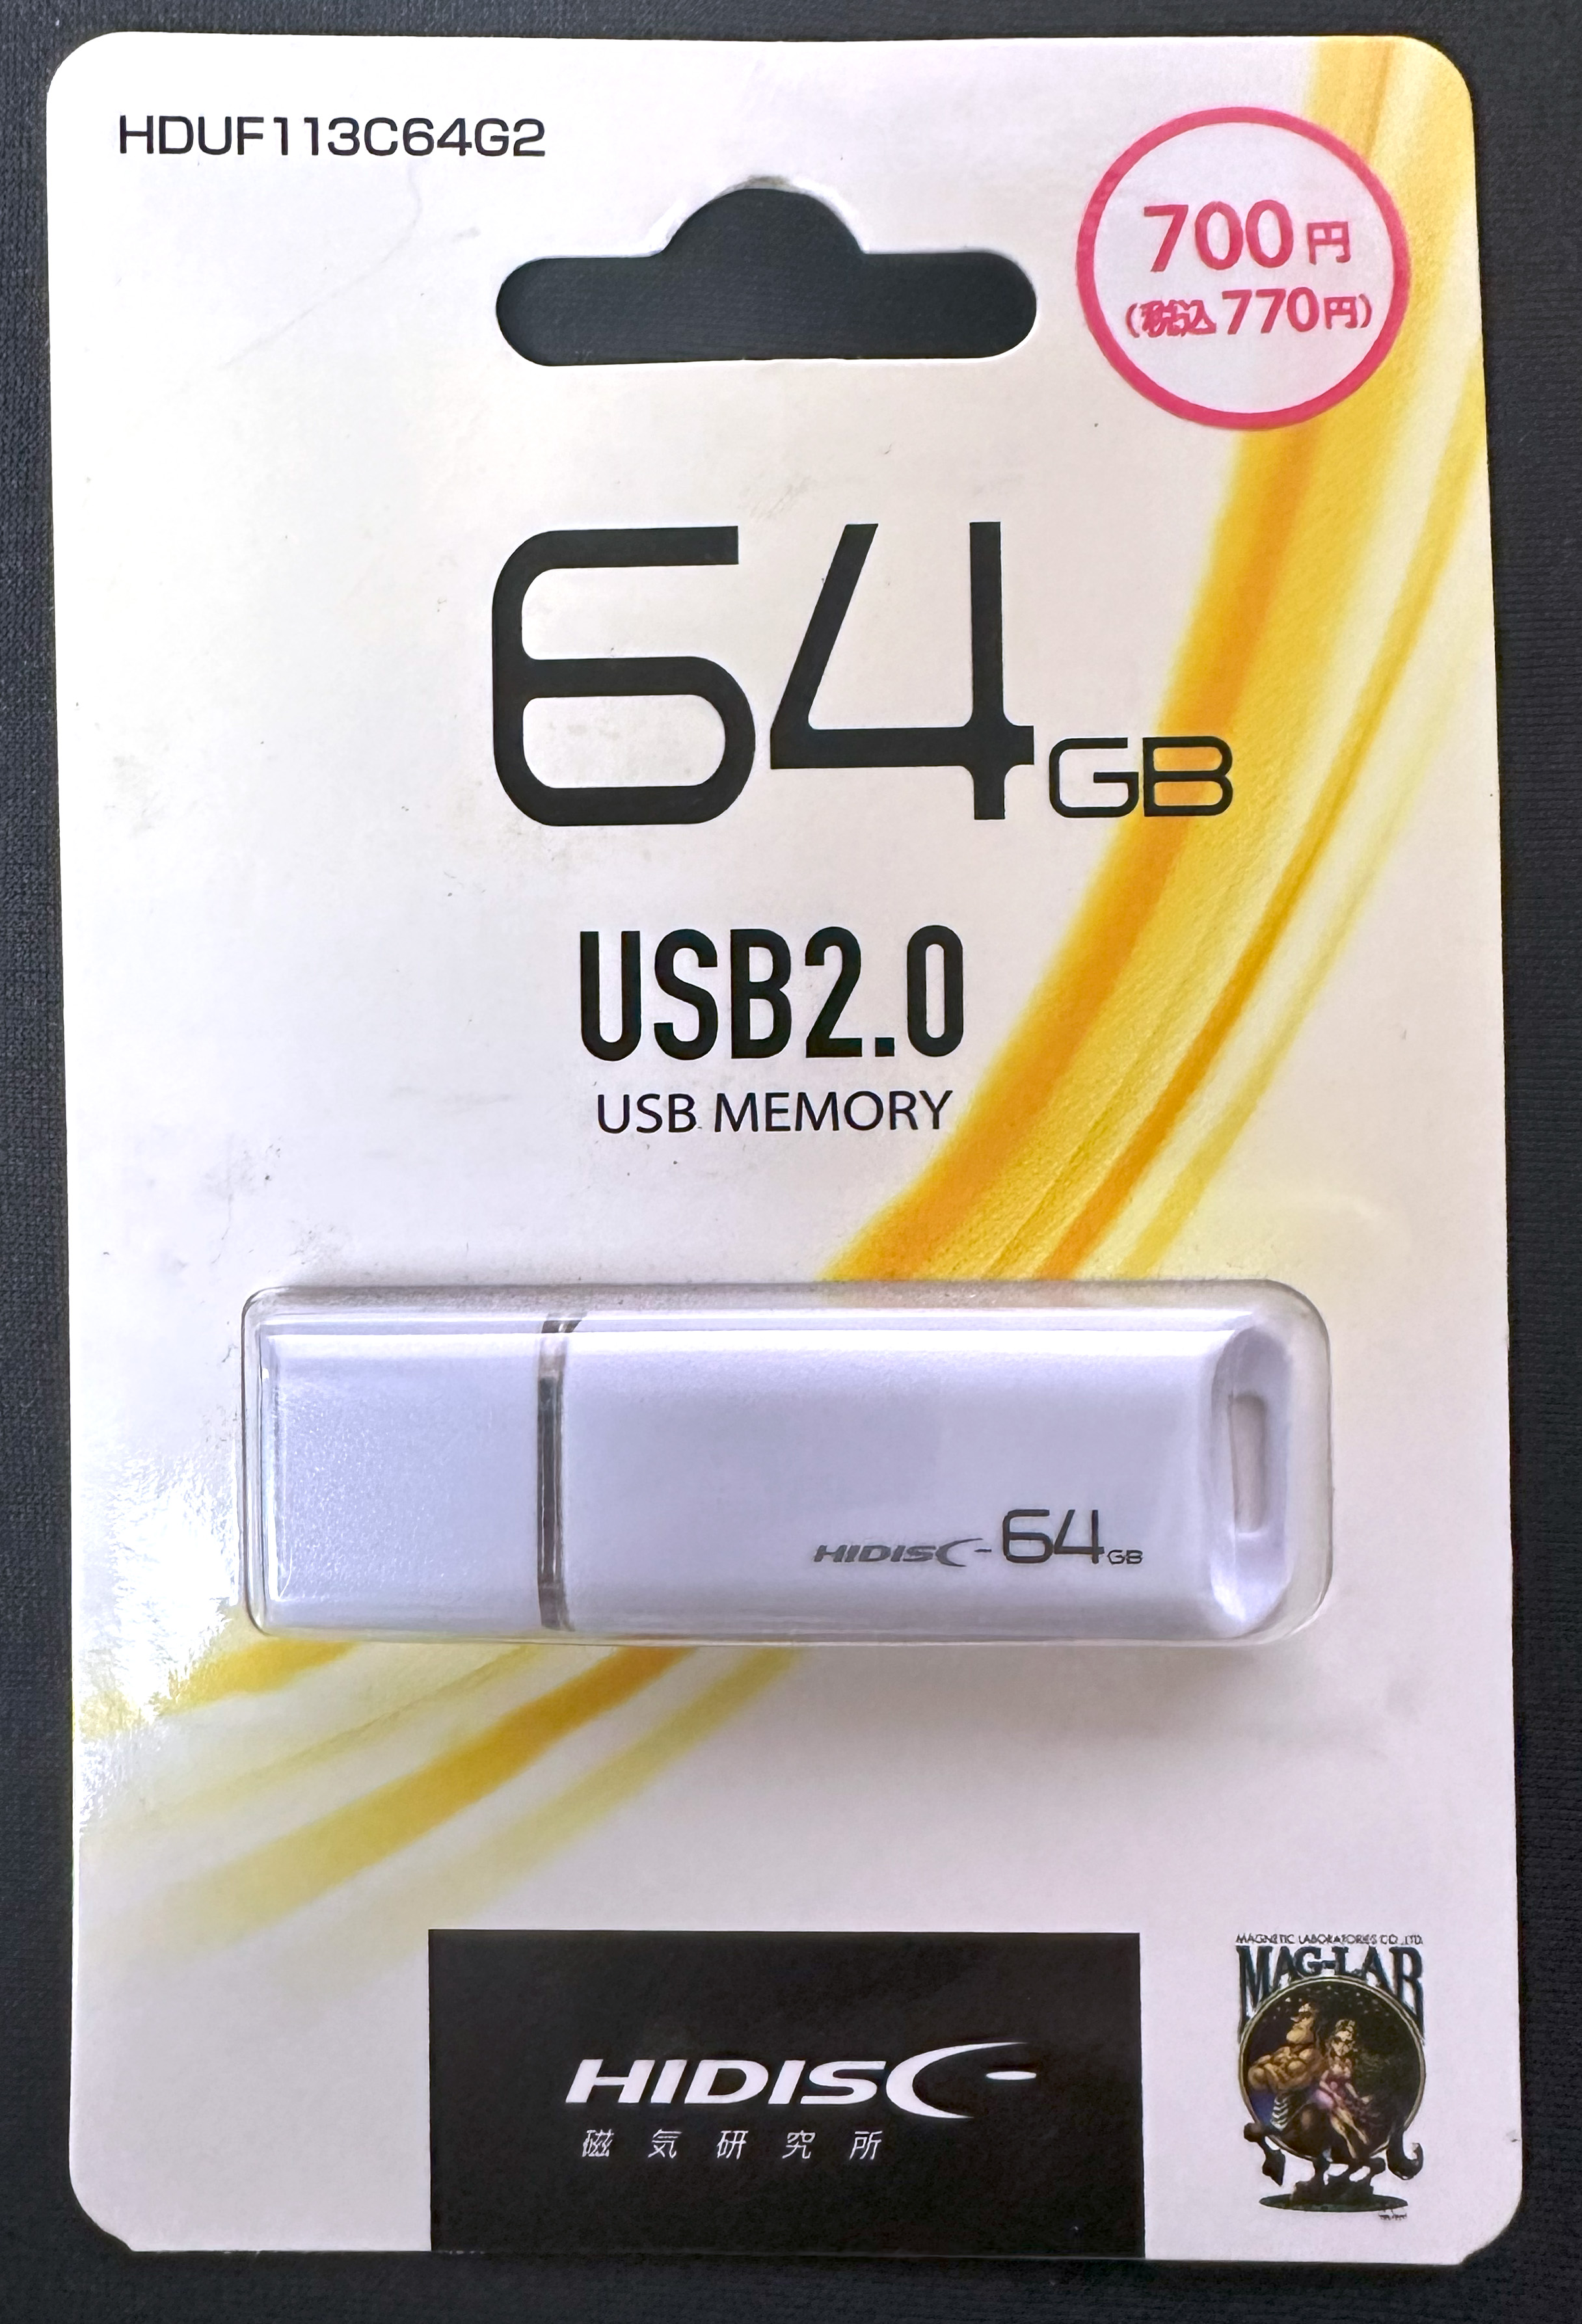 HIDISC USB2.0 USB MEMORY 64GB (HDUF113C64G2) Package Front